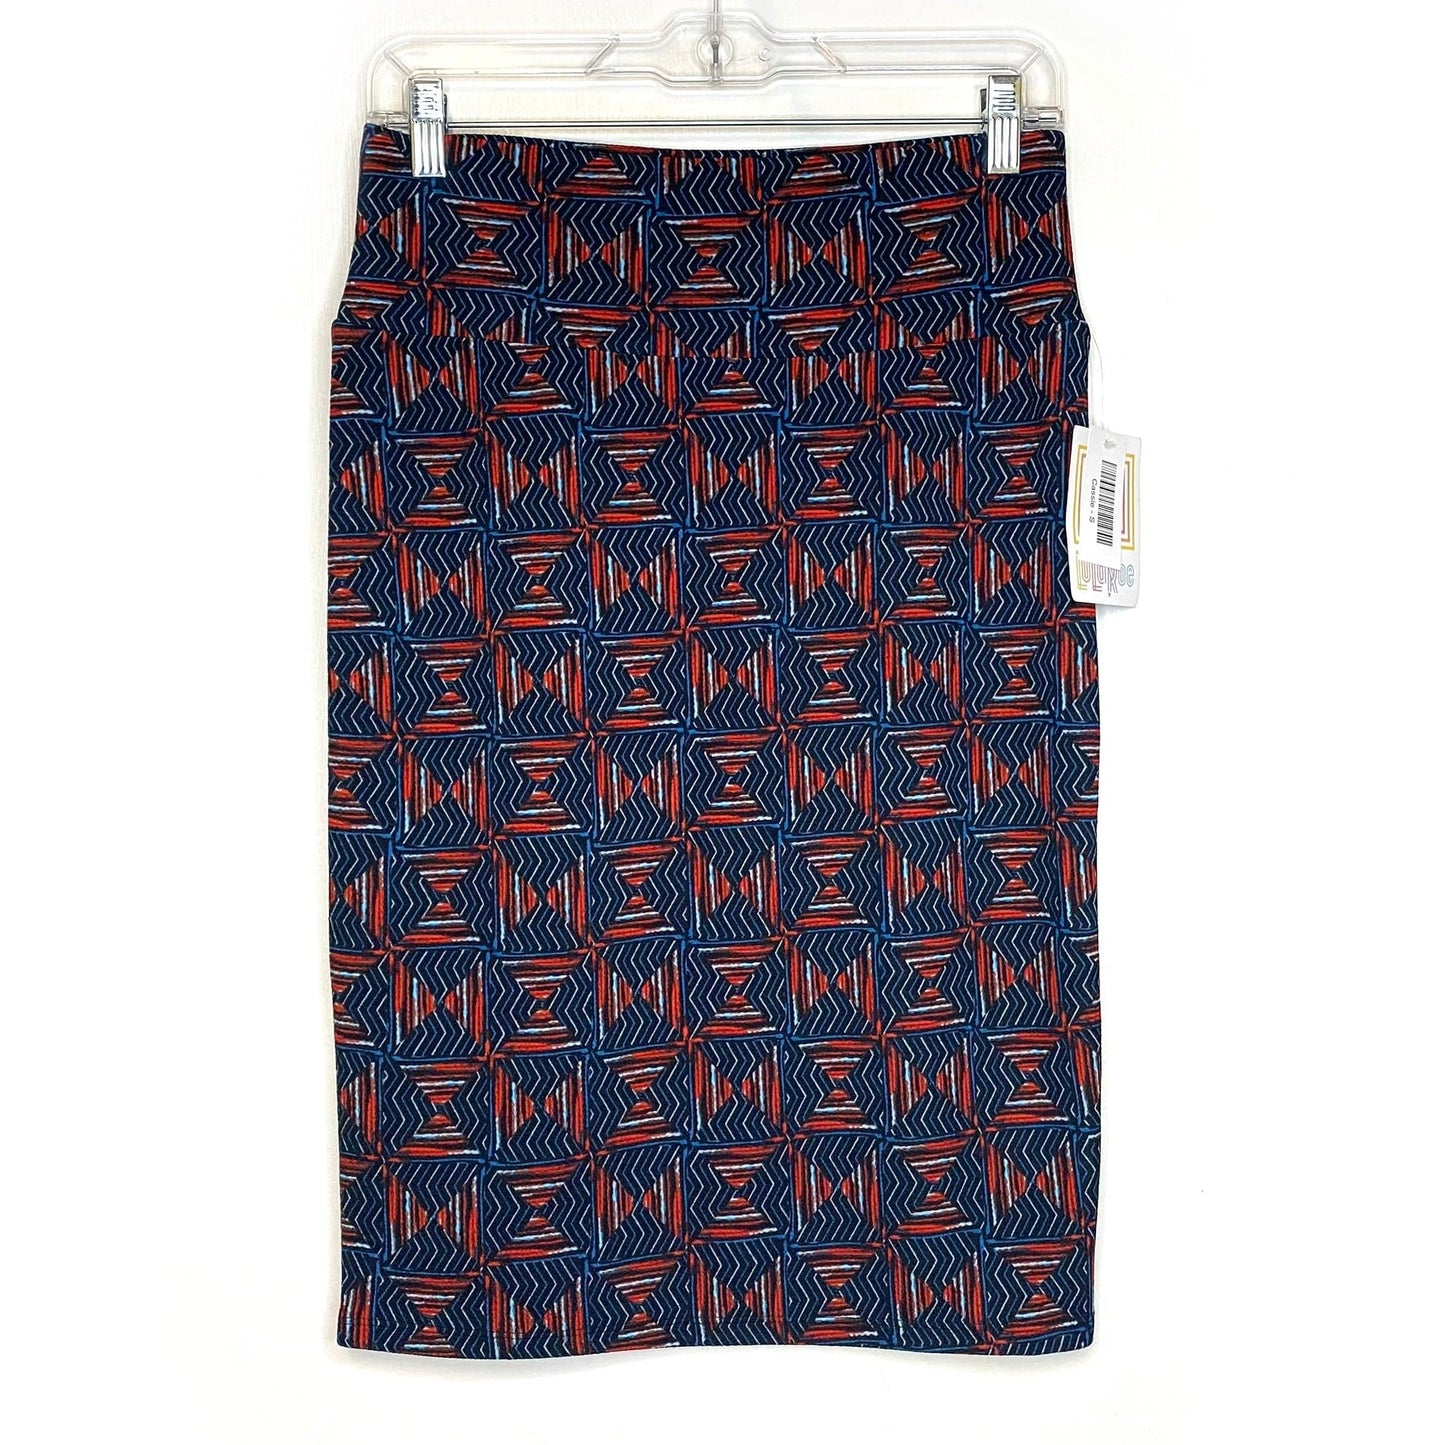 LuLaRoe Womens S Red/Blue/Black Cassie Geometric Skirt NWT